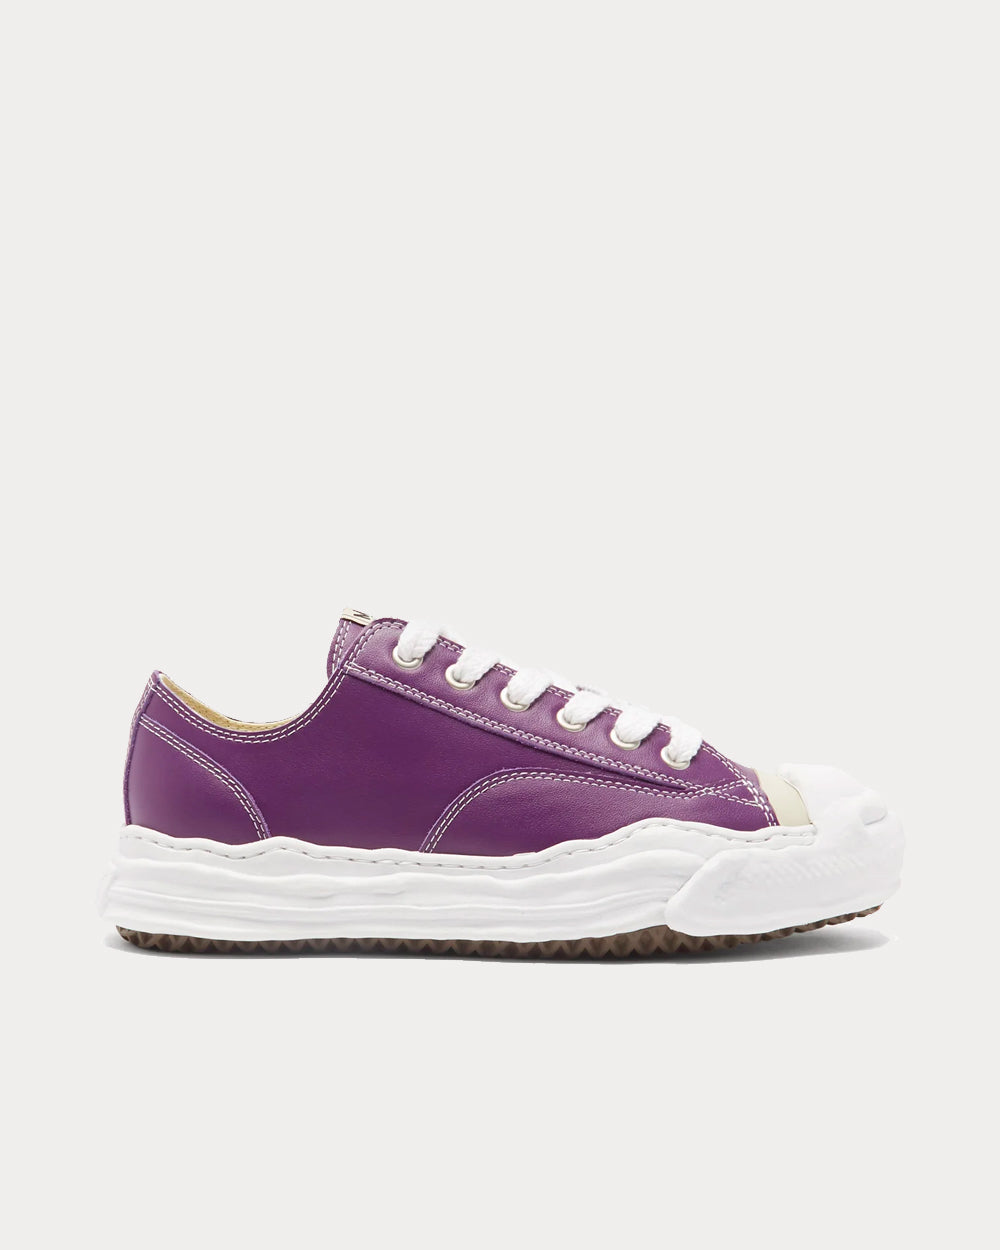 Mihara Yasuhiro Hank Original Sole Purple Low Top Sneakers - Sneak in Peace